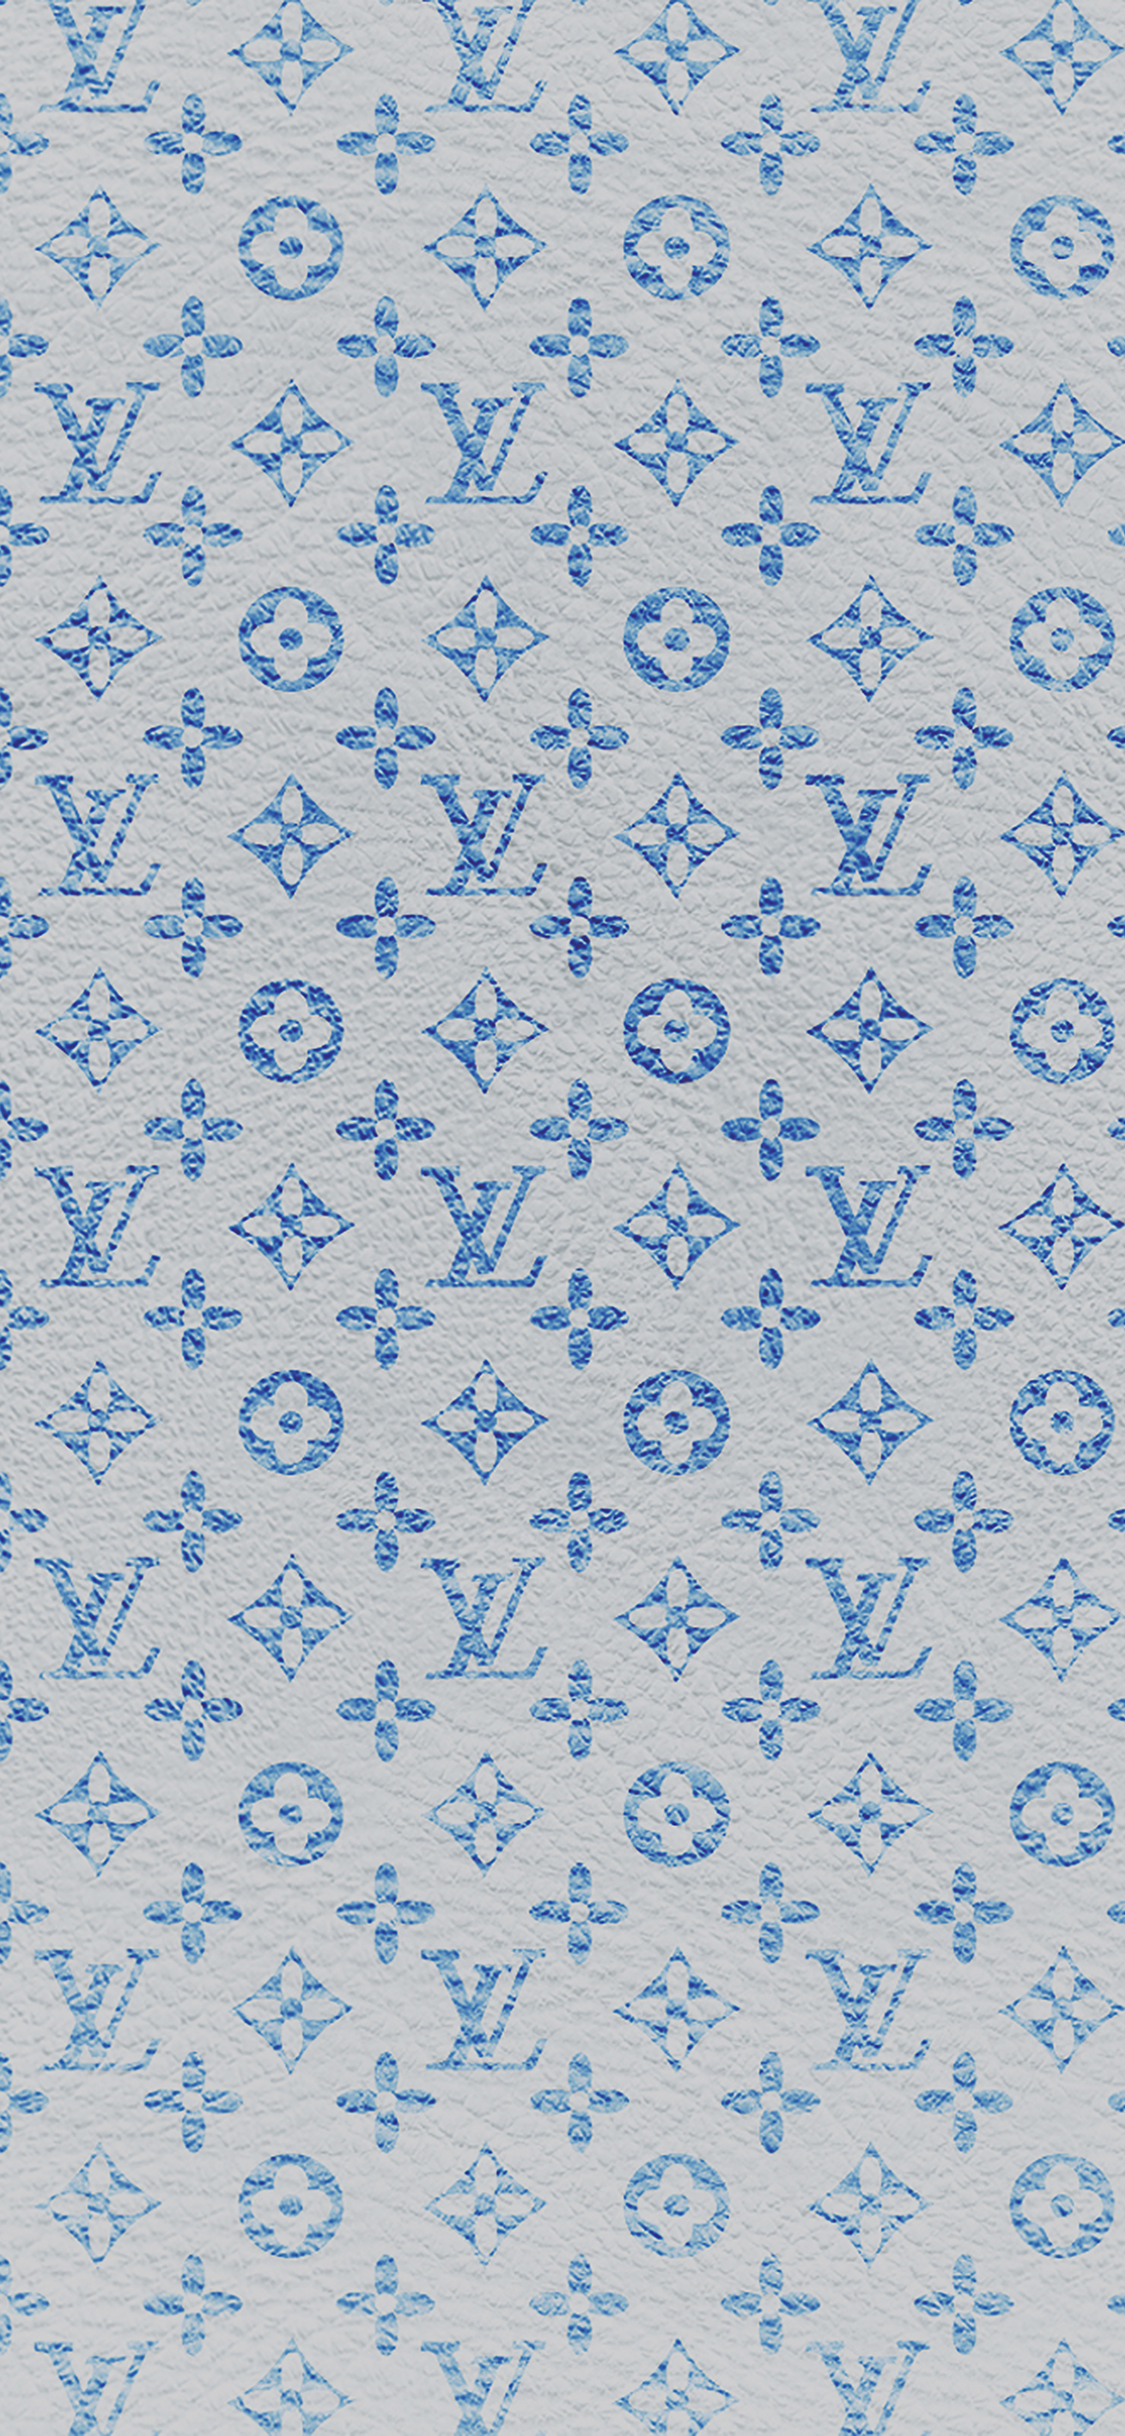 Louis Vuitton Blue Pattern Art Iphone Wallpapers Free Download